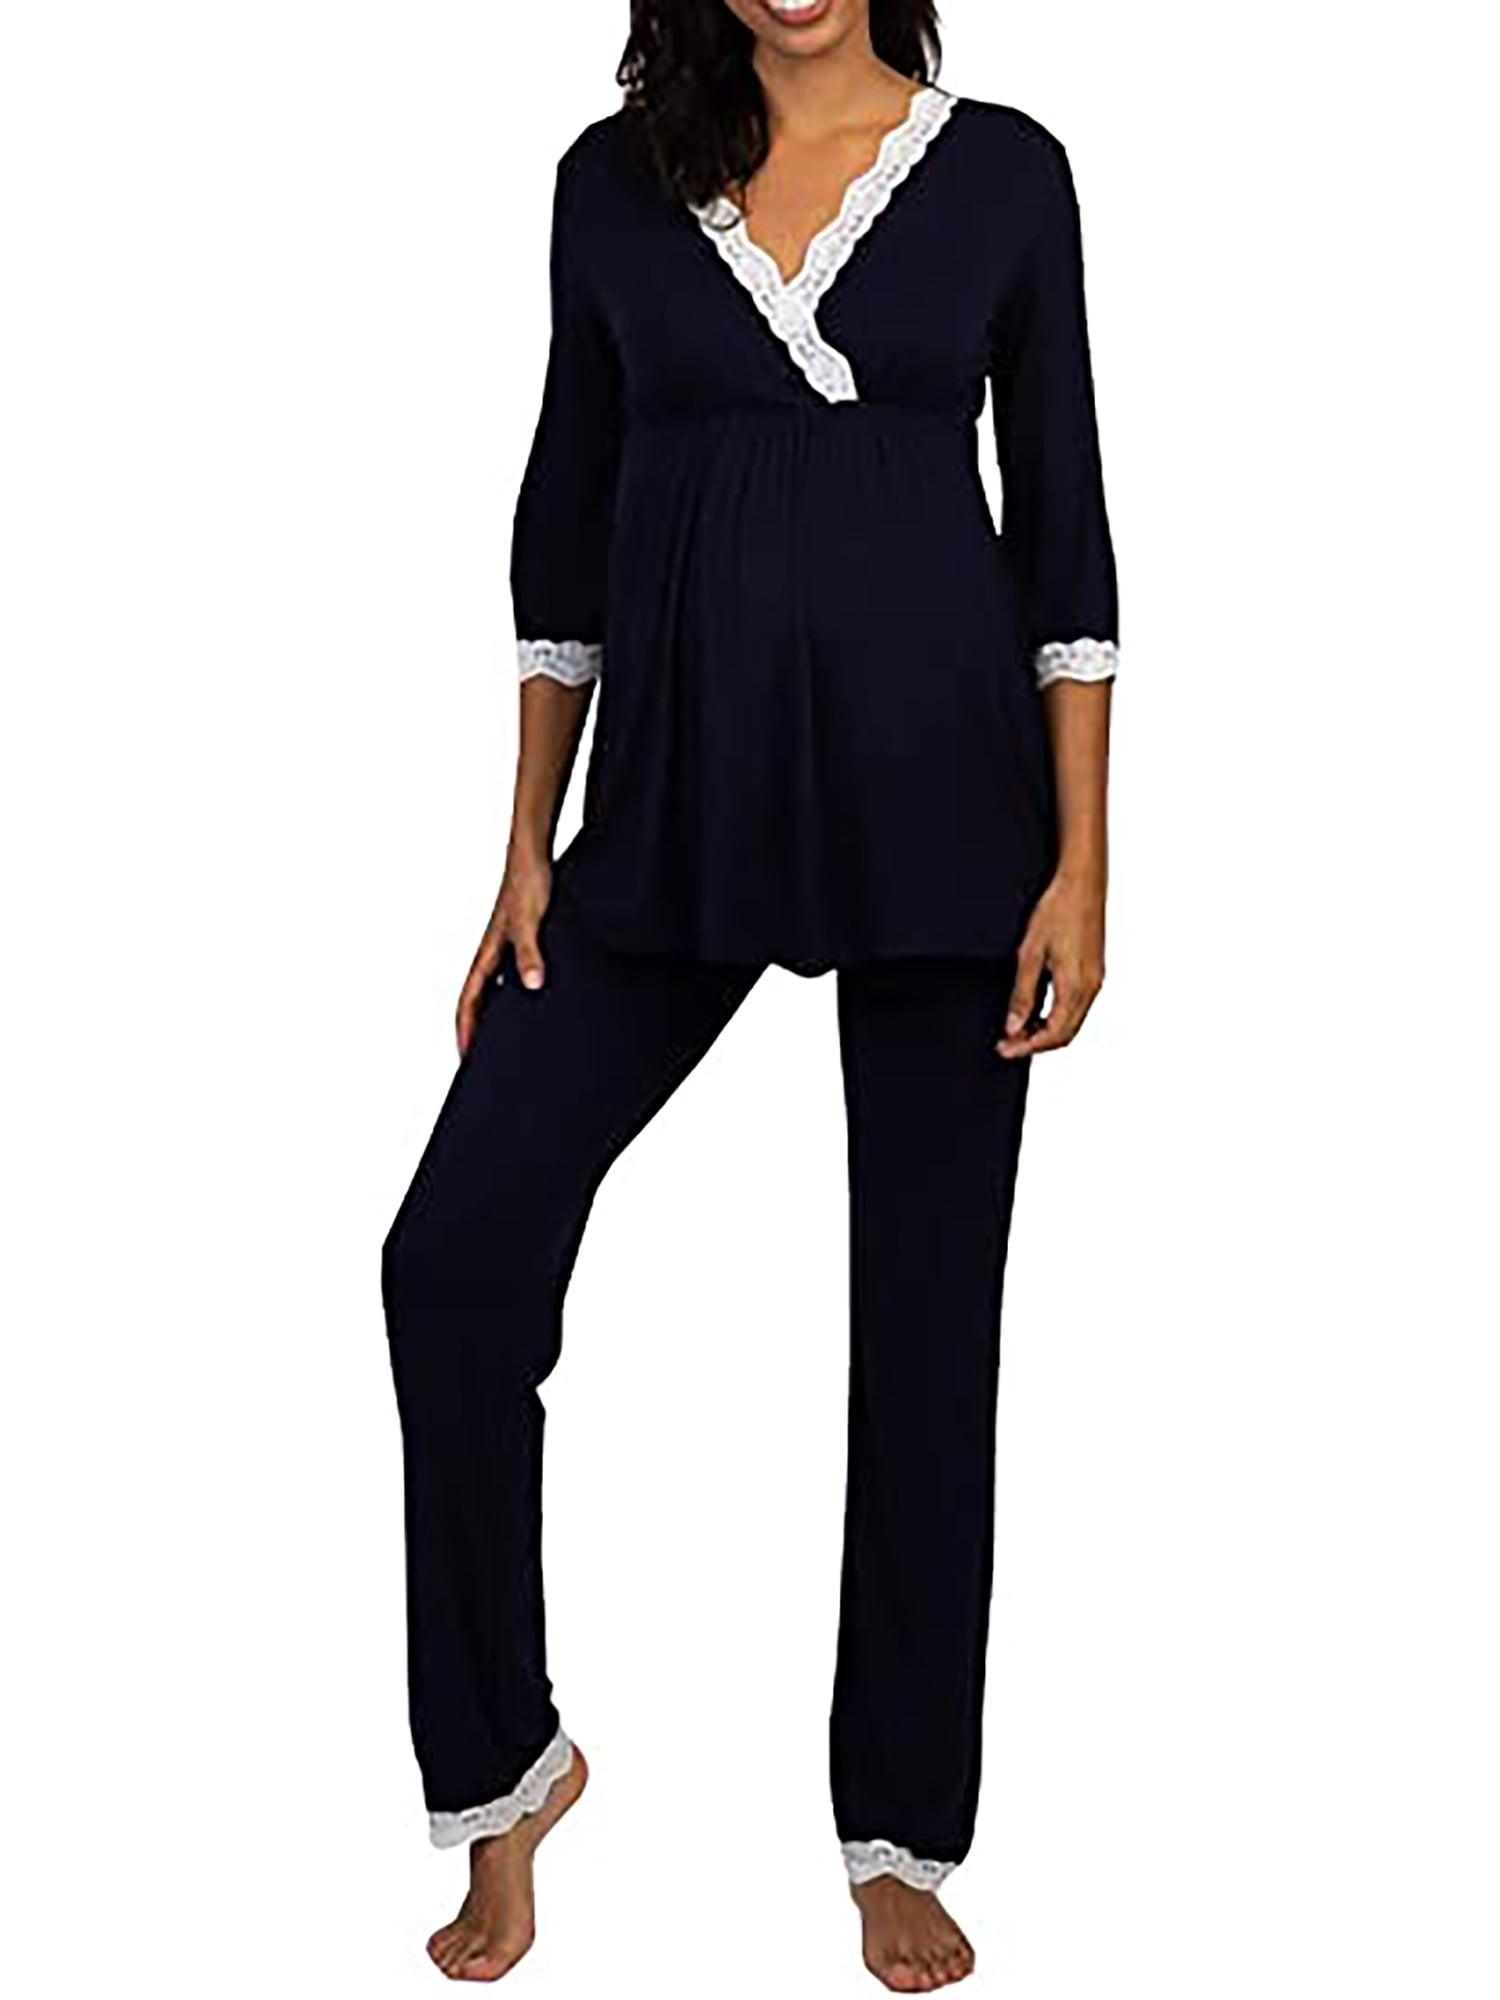 100% Cotton Postpartum Women Clothes Set Breastfeeding Sleepwear Maternity  Pajamas Set Camison Lactancia Hospital Nursing